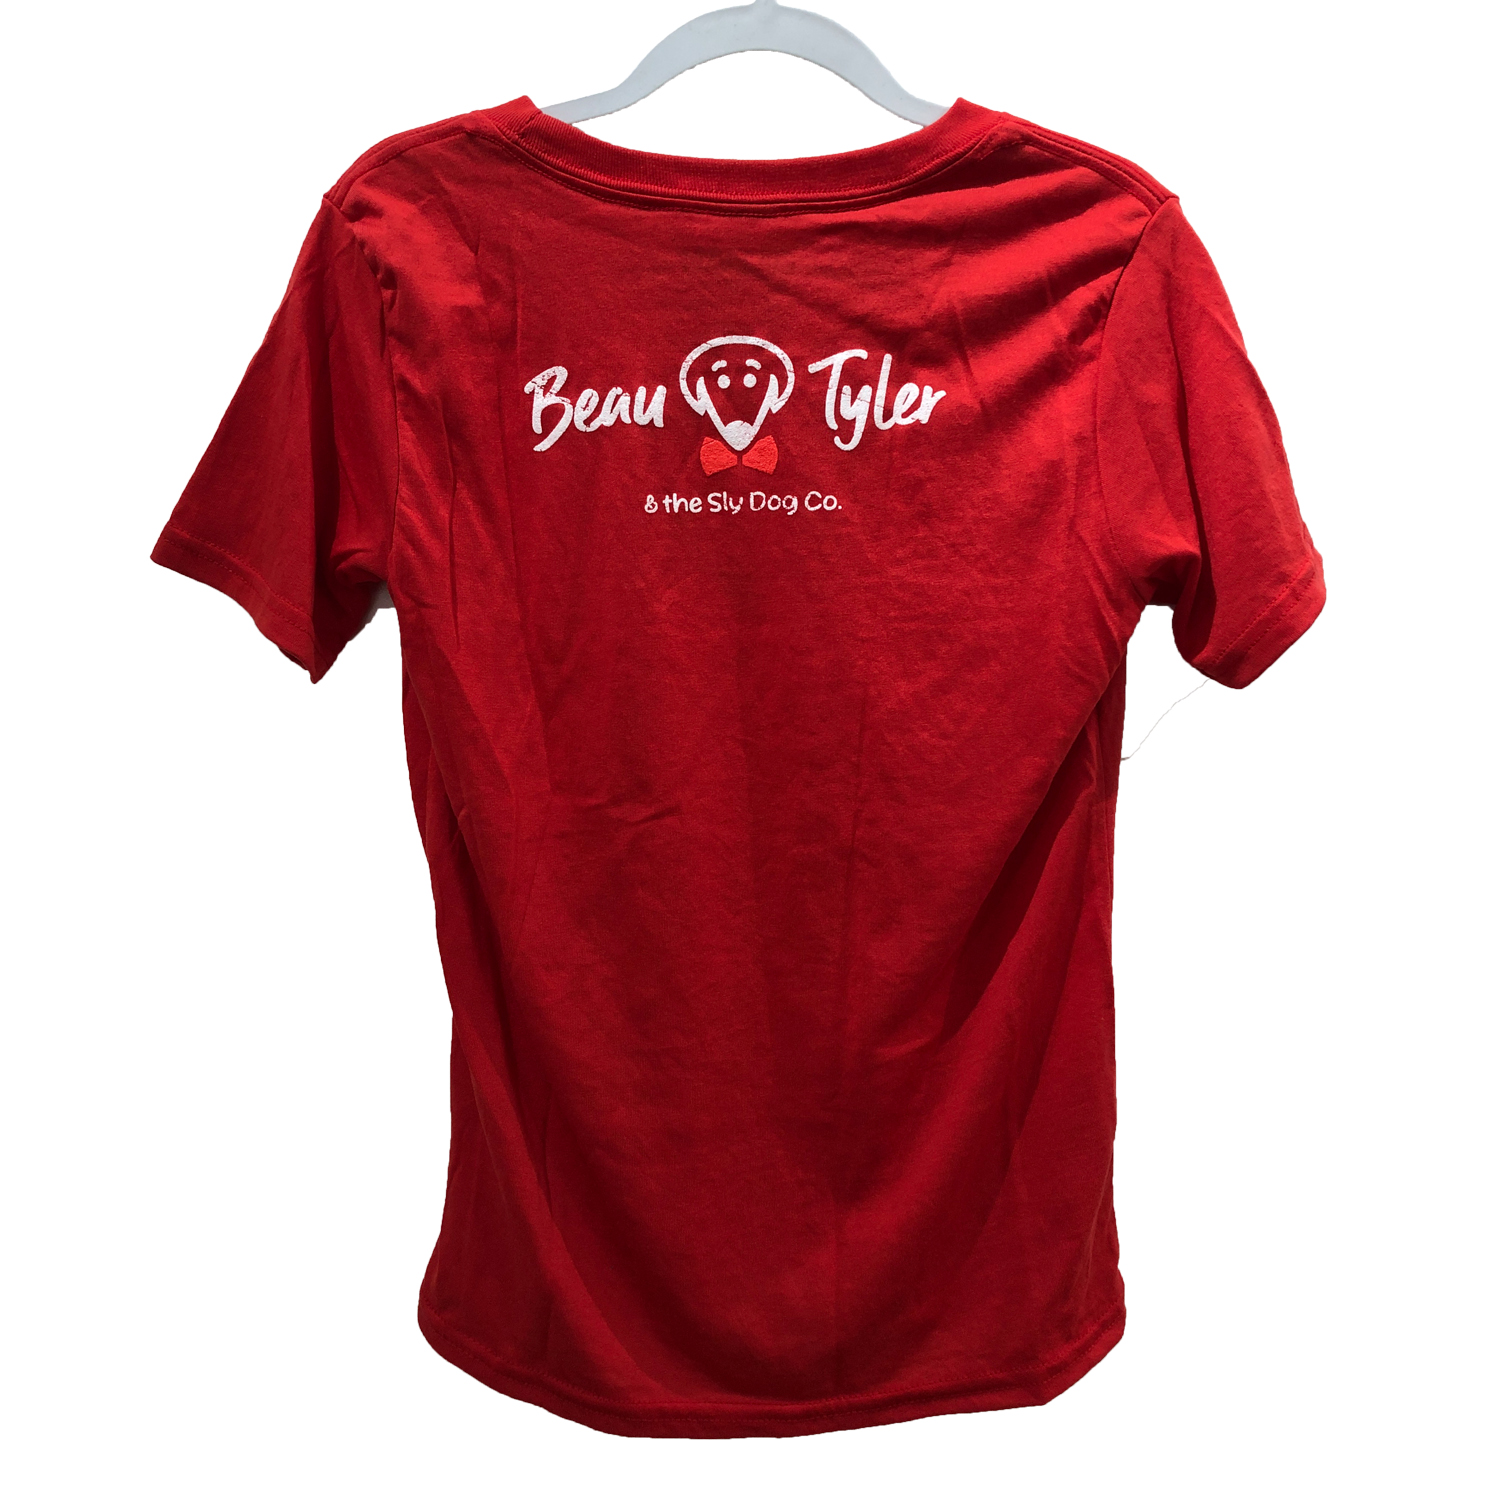 Beau Tyler - kids vintage Kelly shirt red back no newport temp